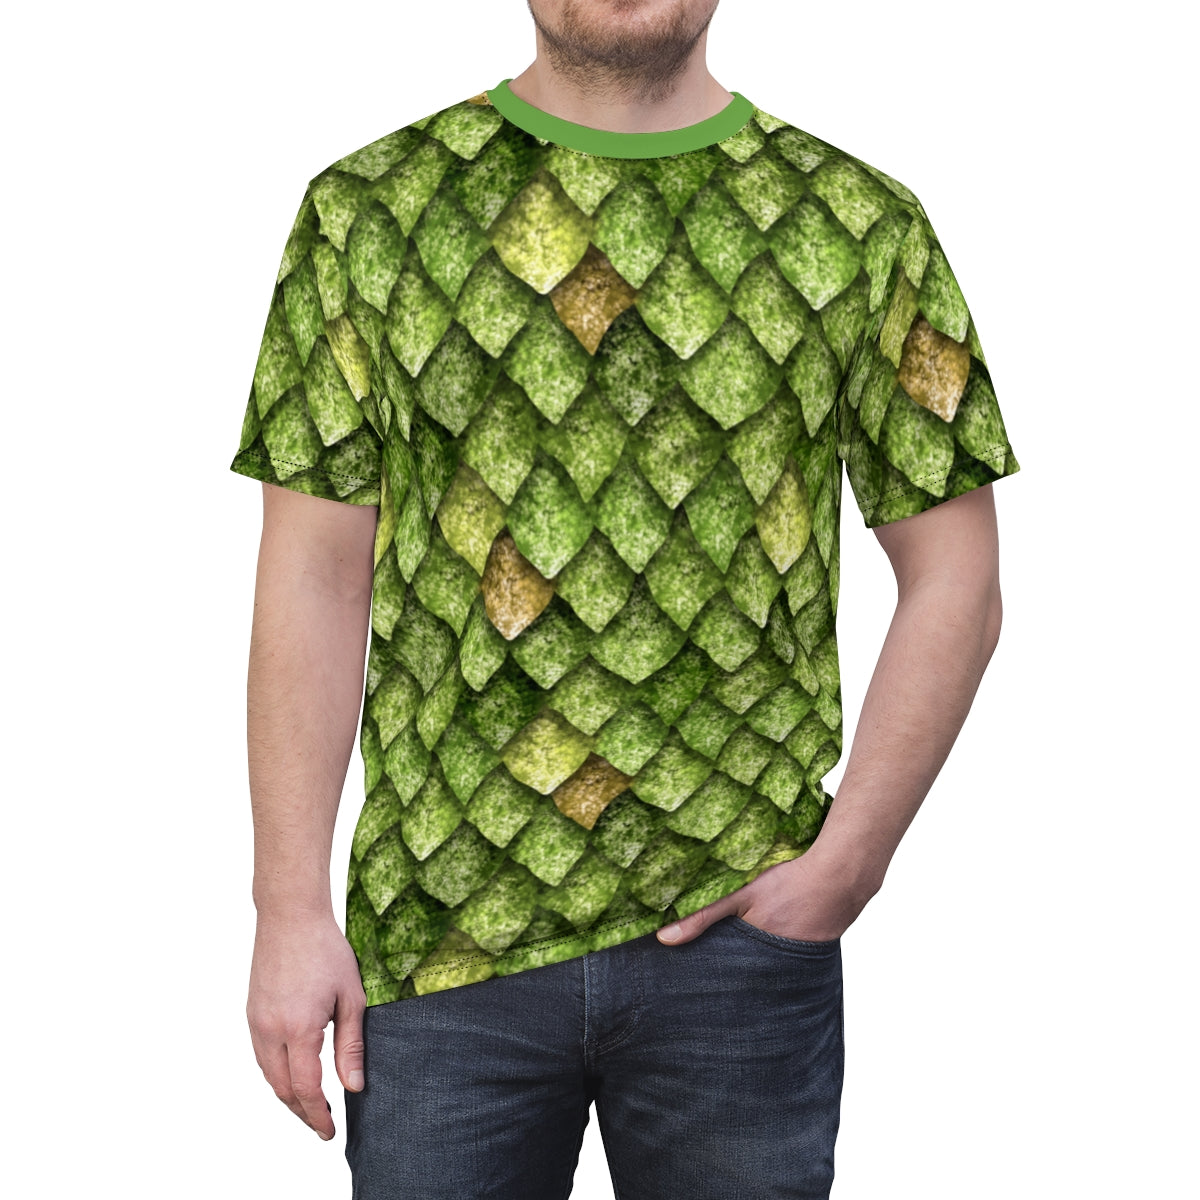 Green Dragon Scale Shirt